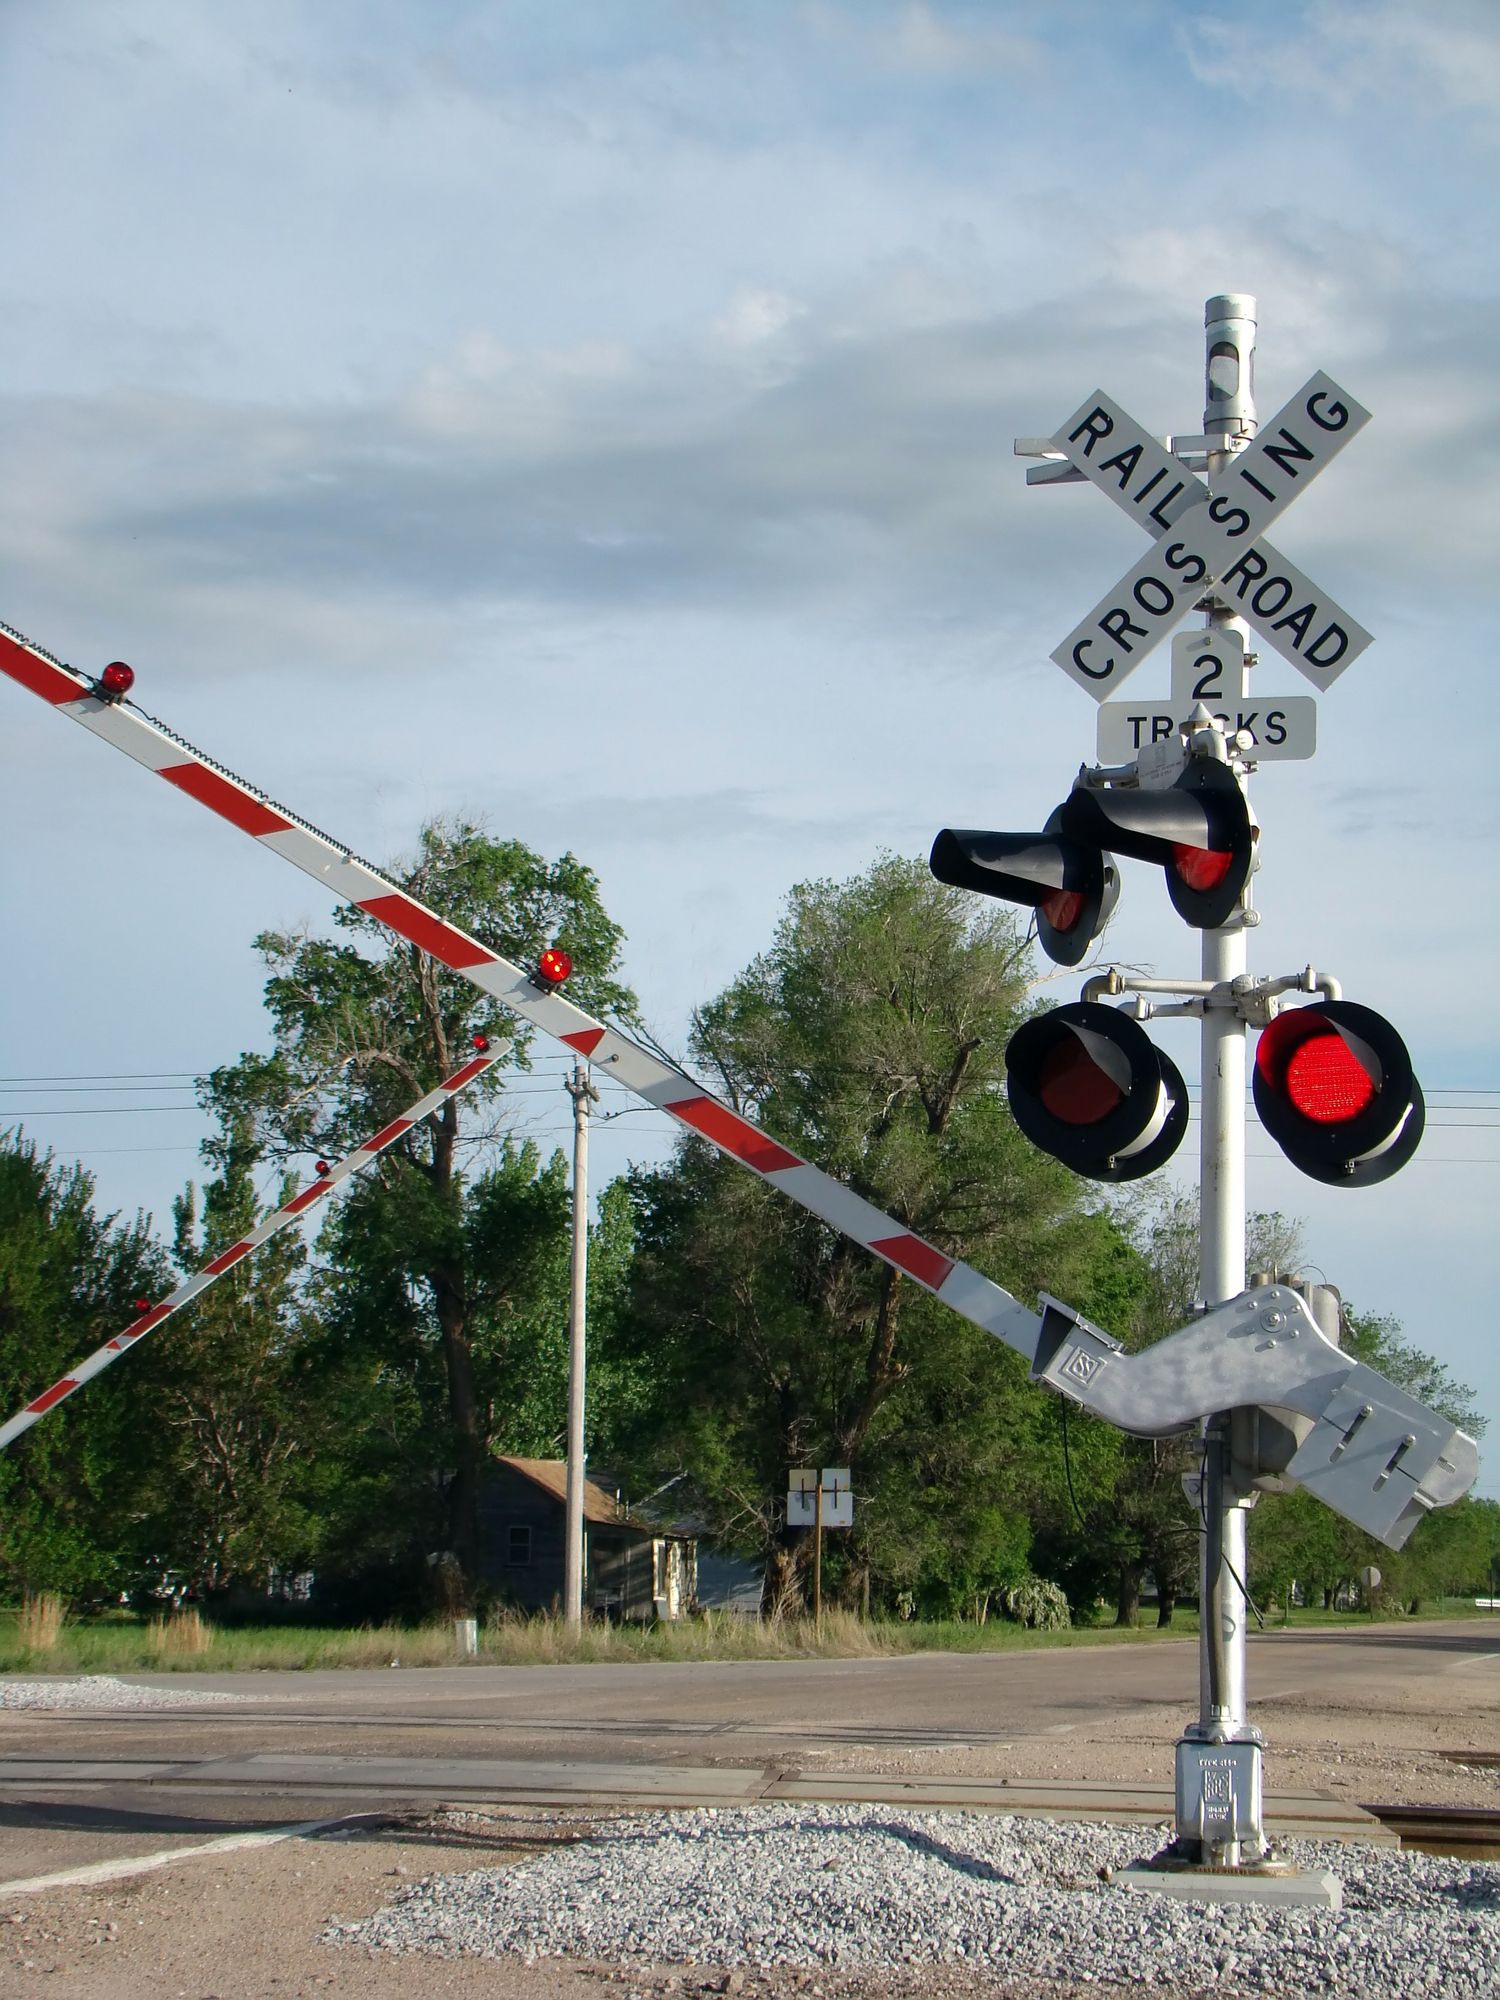 rail+road+crossing+ | Railroad crossing | Trains | Pinterest ...